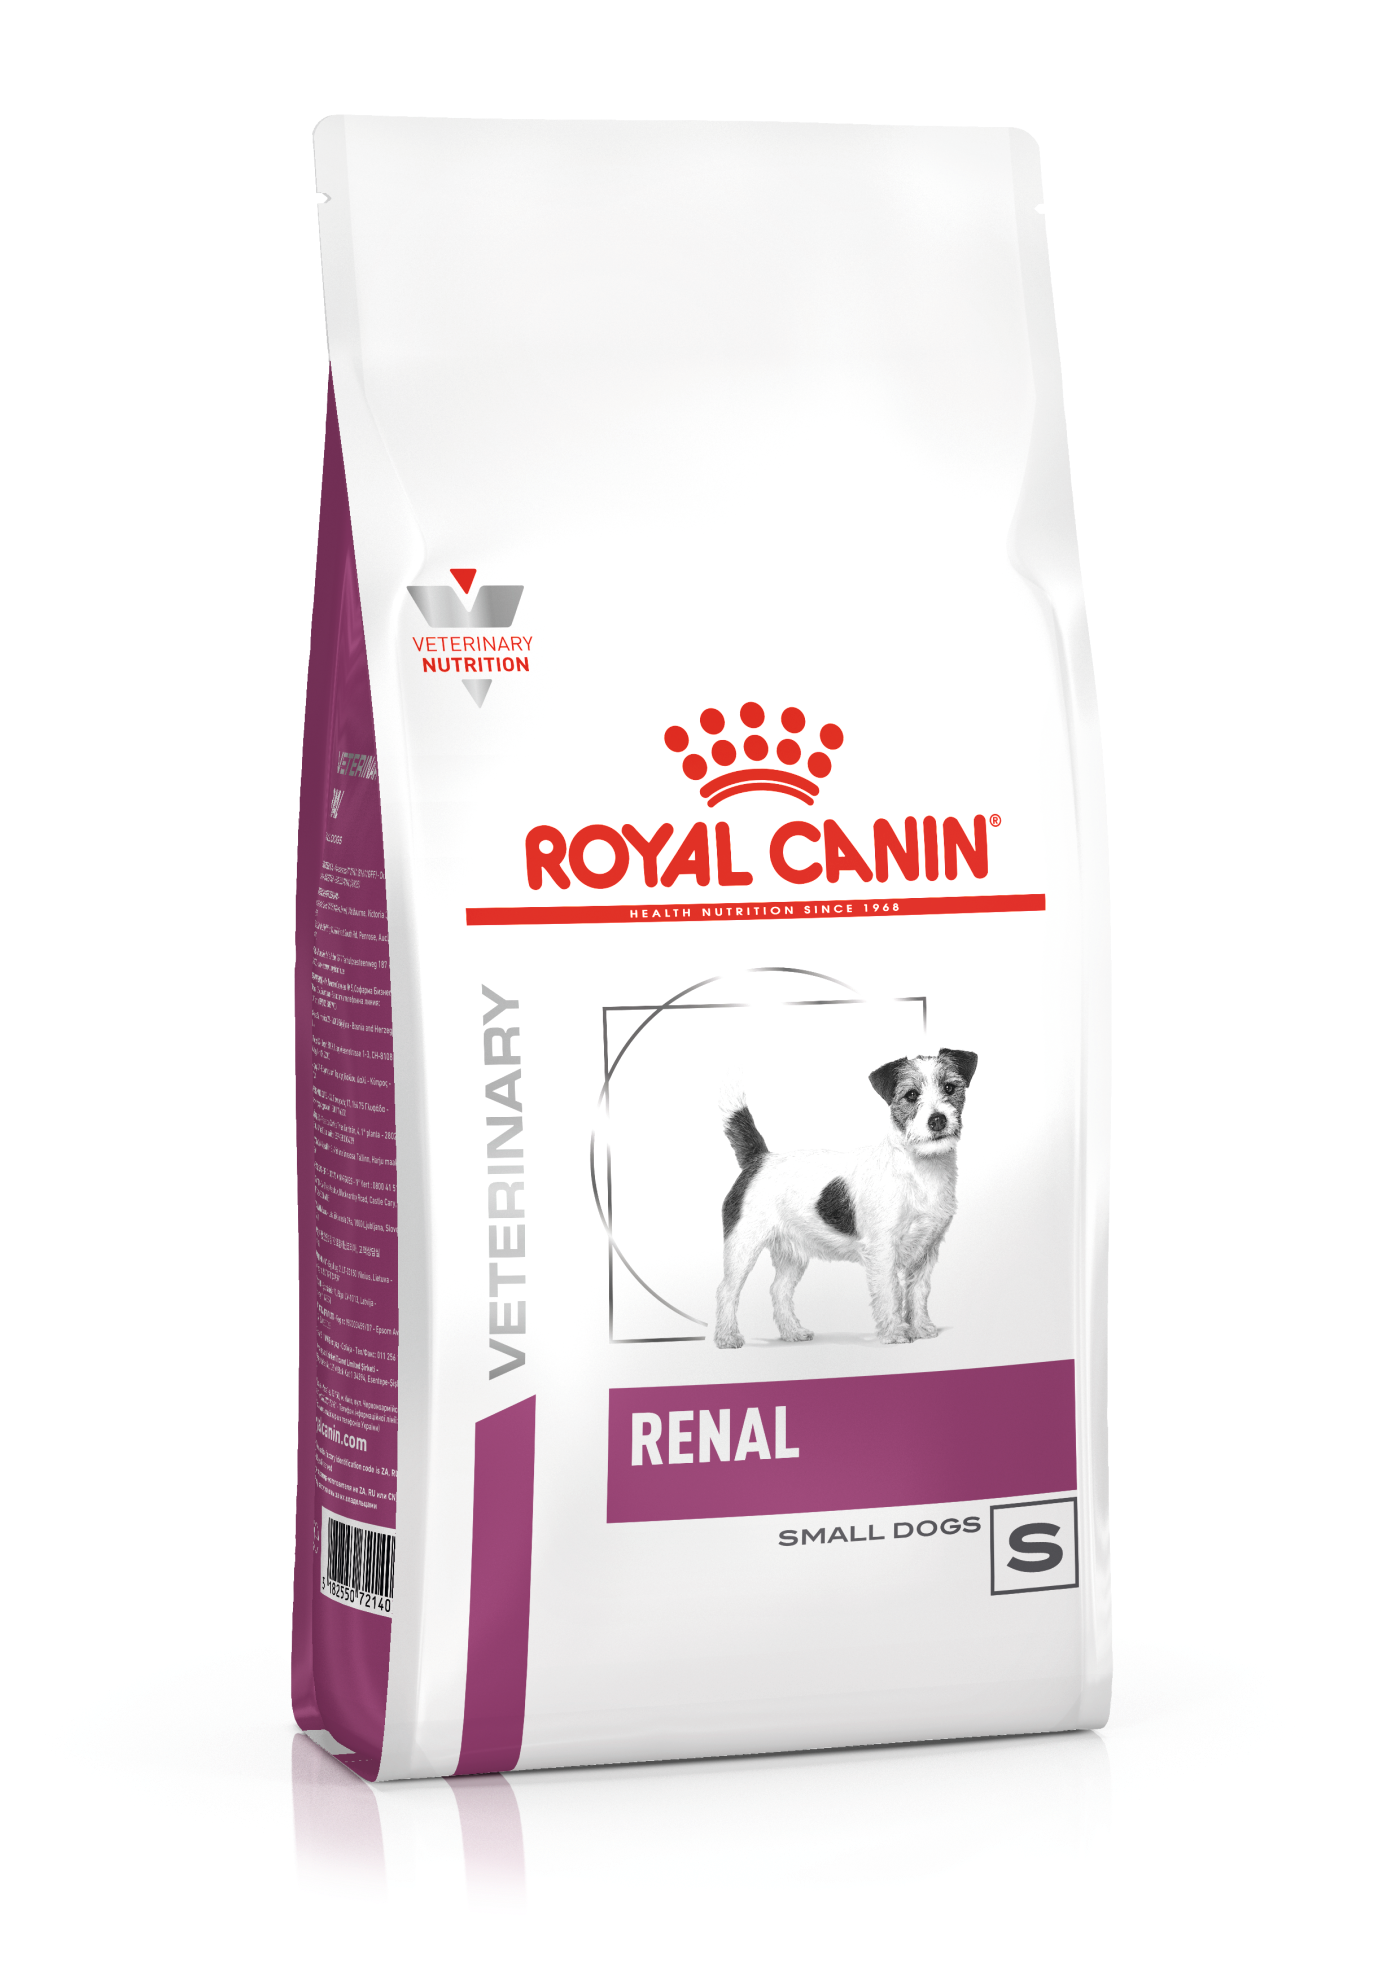 Royal Canin Aliments Veterinaire Pour Chiens